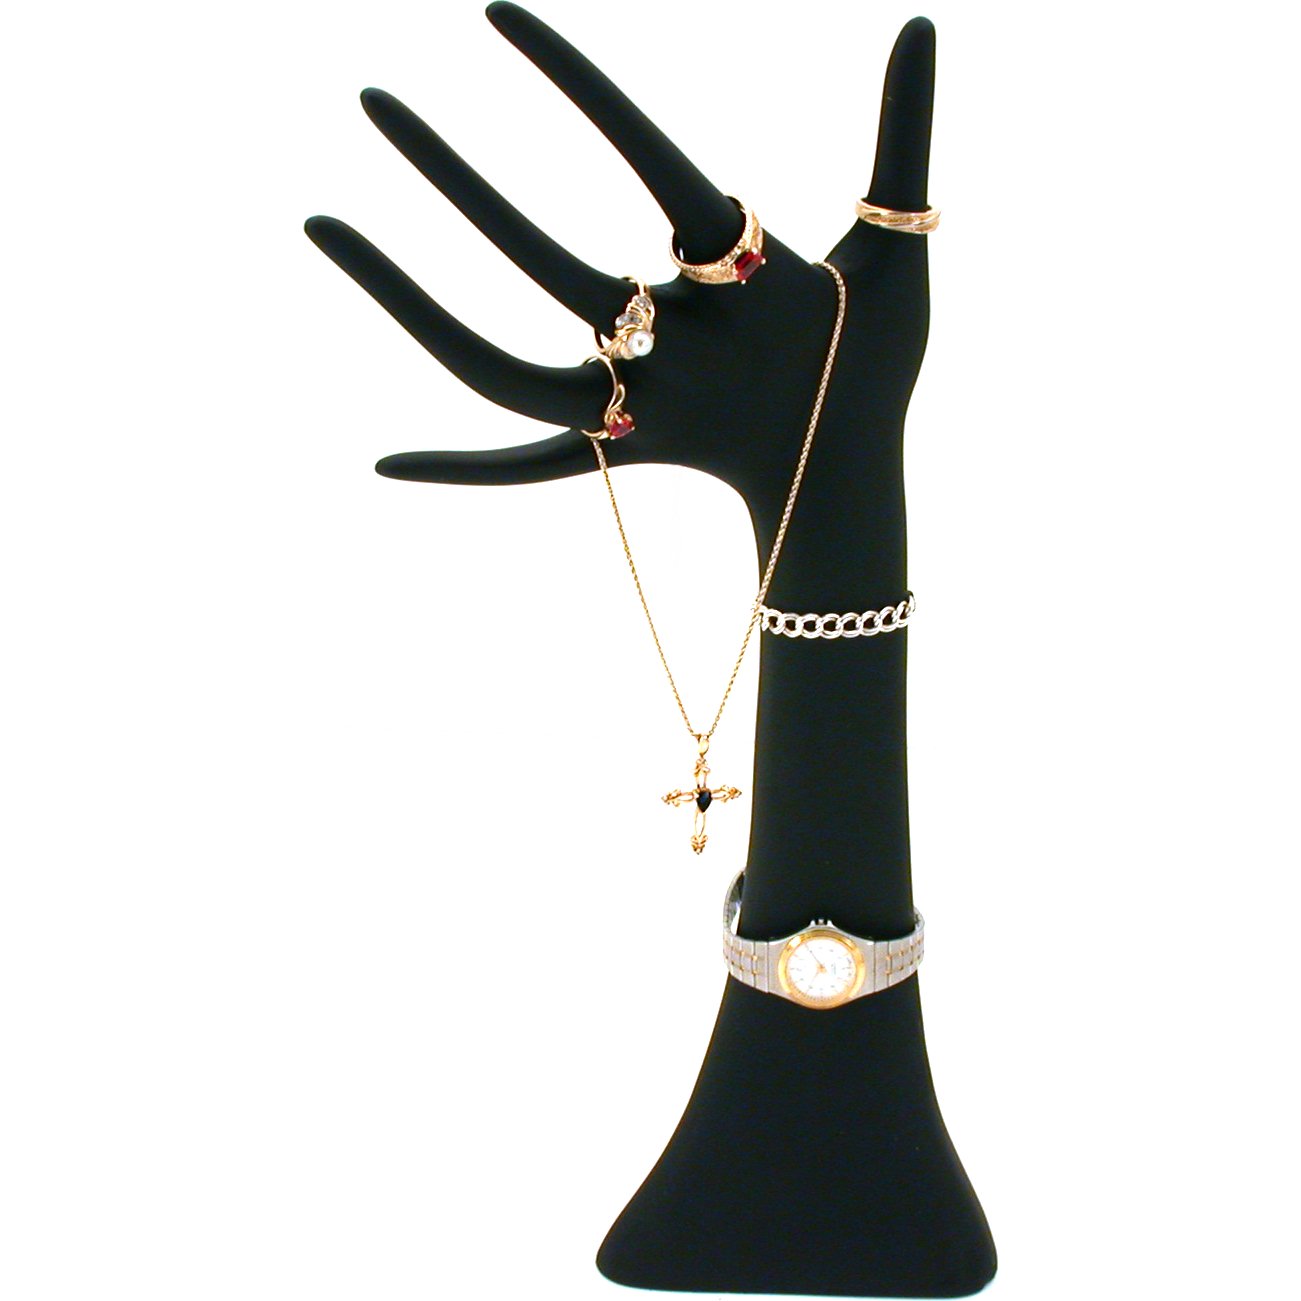 2 Black Jewelry Hand Displays